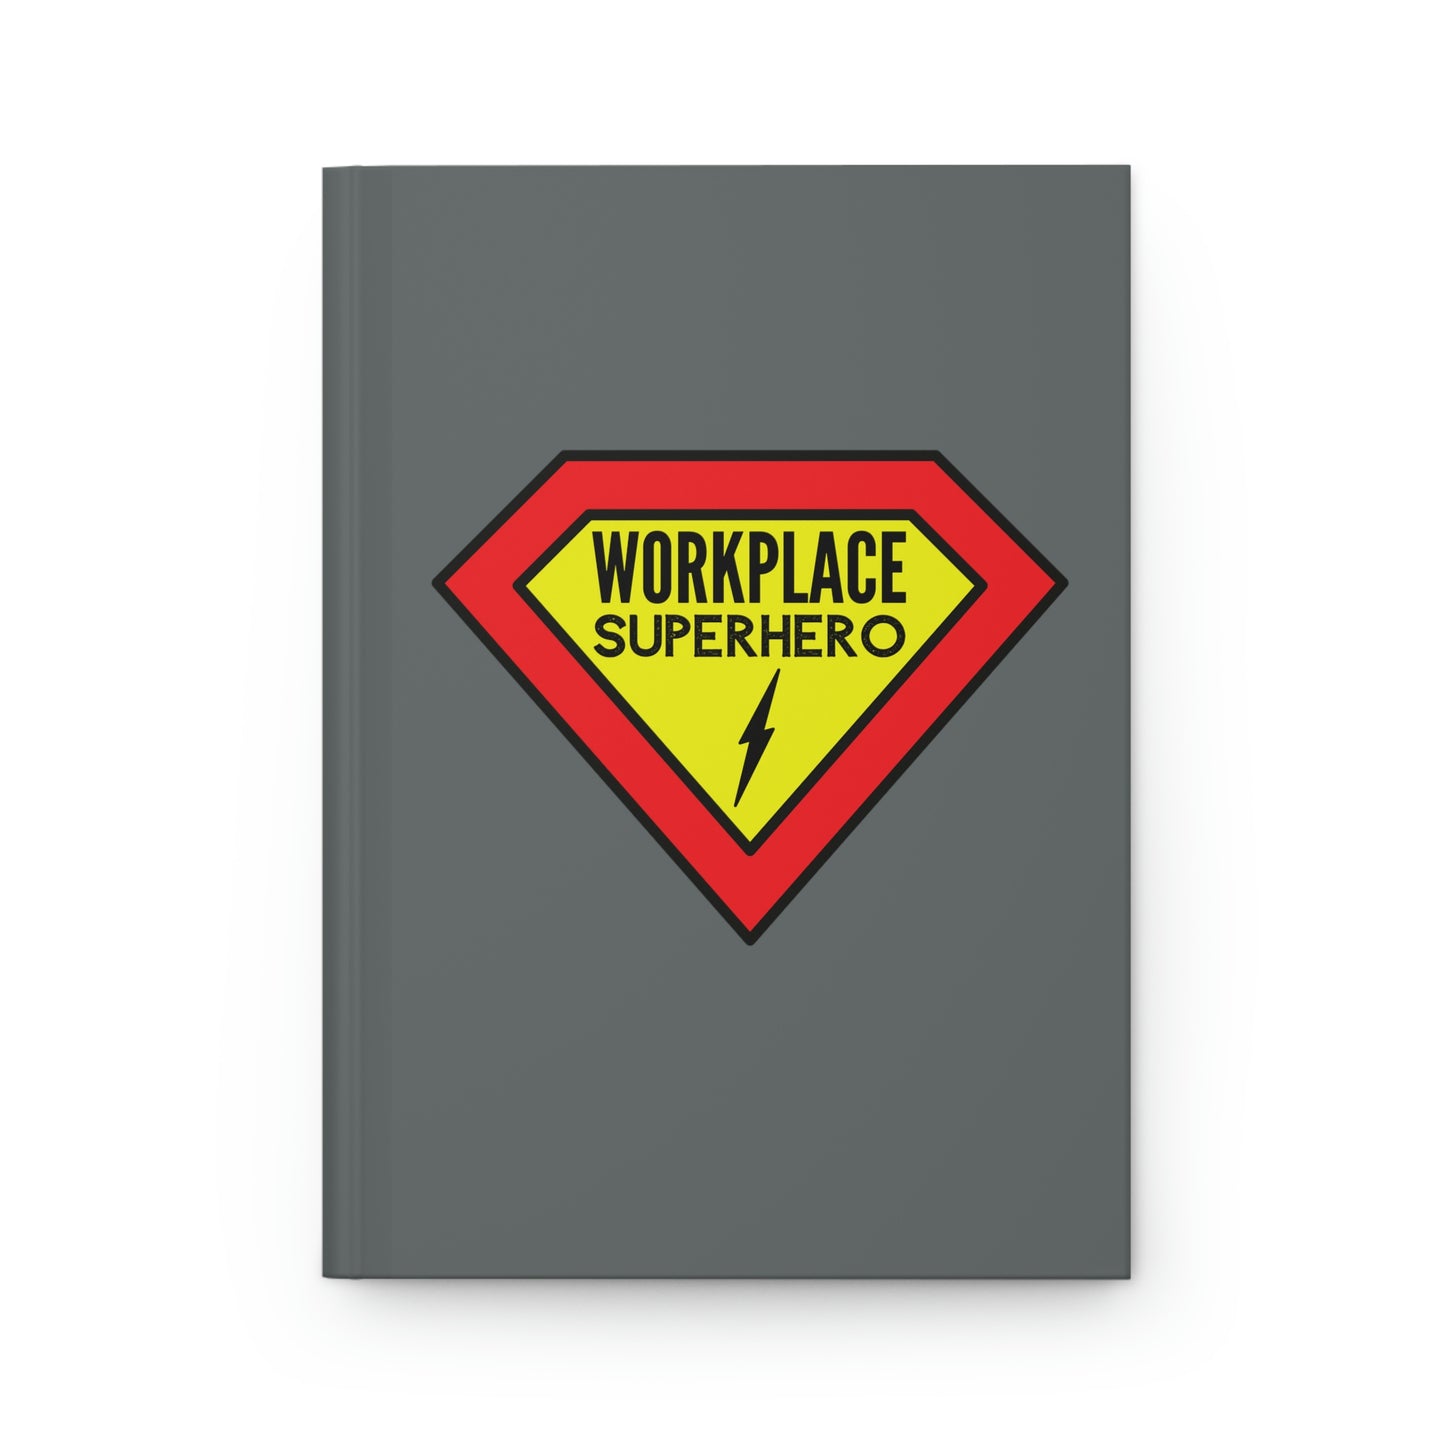 "Workplace Superhero" Hardcover Journal - Matte